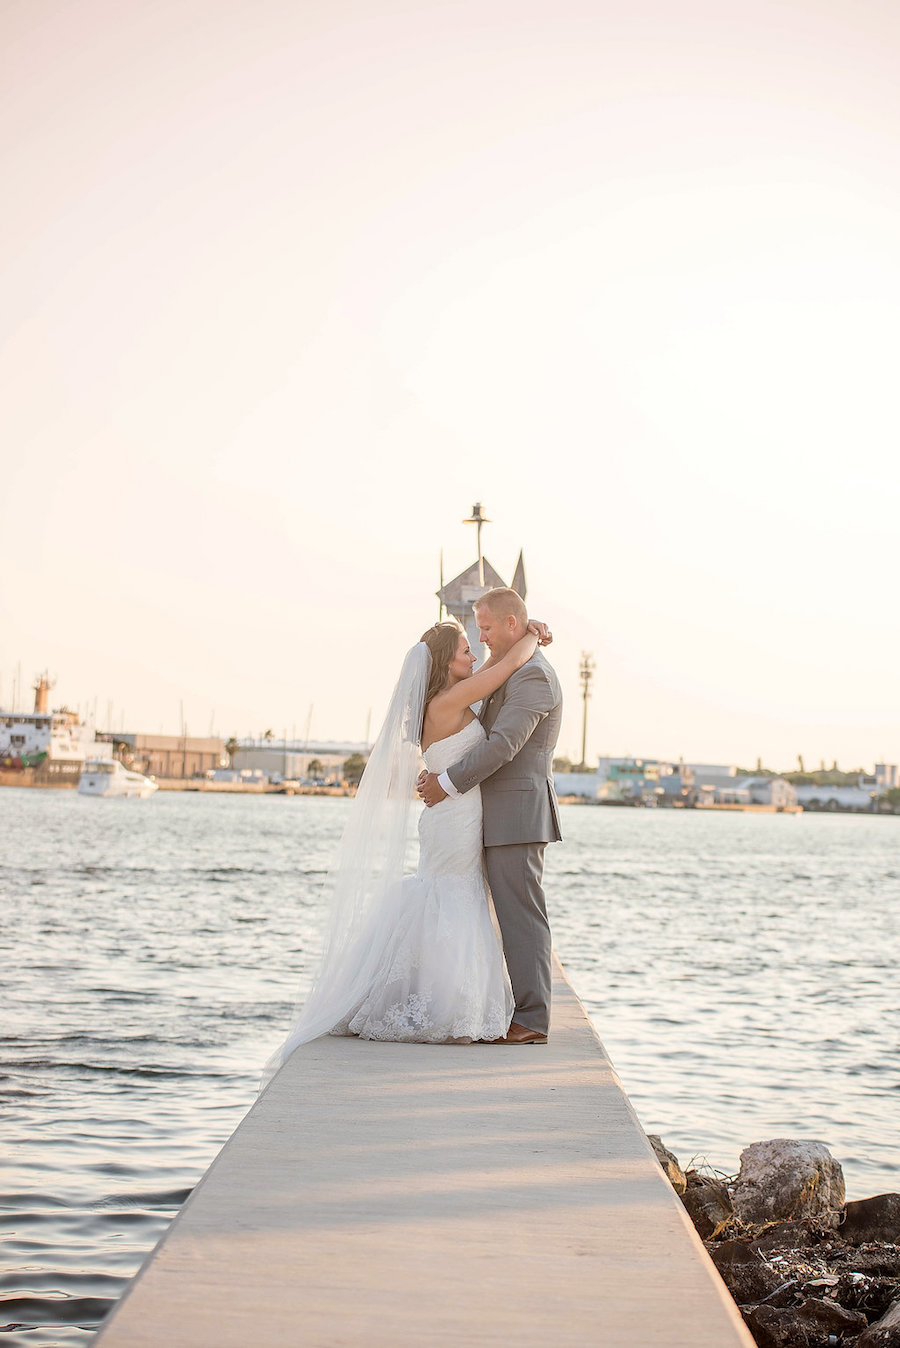 Tampa Bay Bride and Groom Waterfront Wedding Portrait | St Petersburg Wedding Photographer Kristen Marie Photography